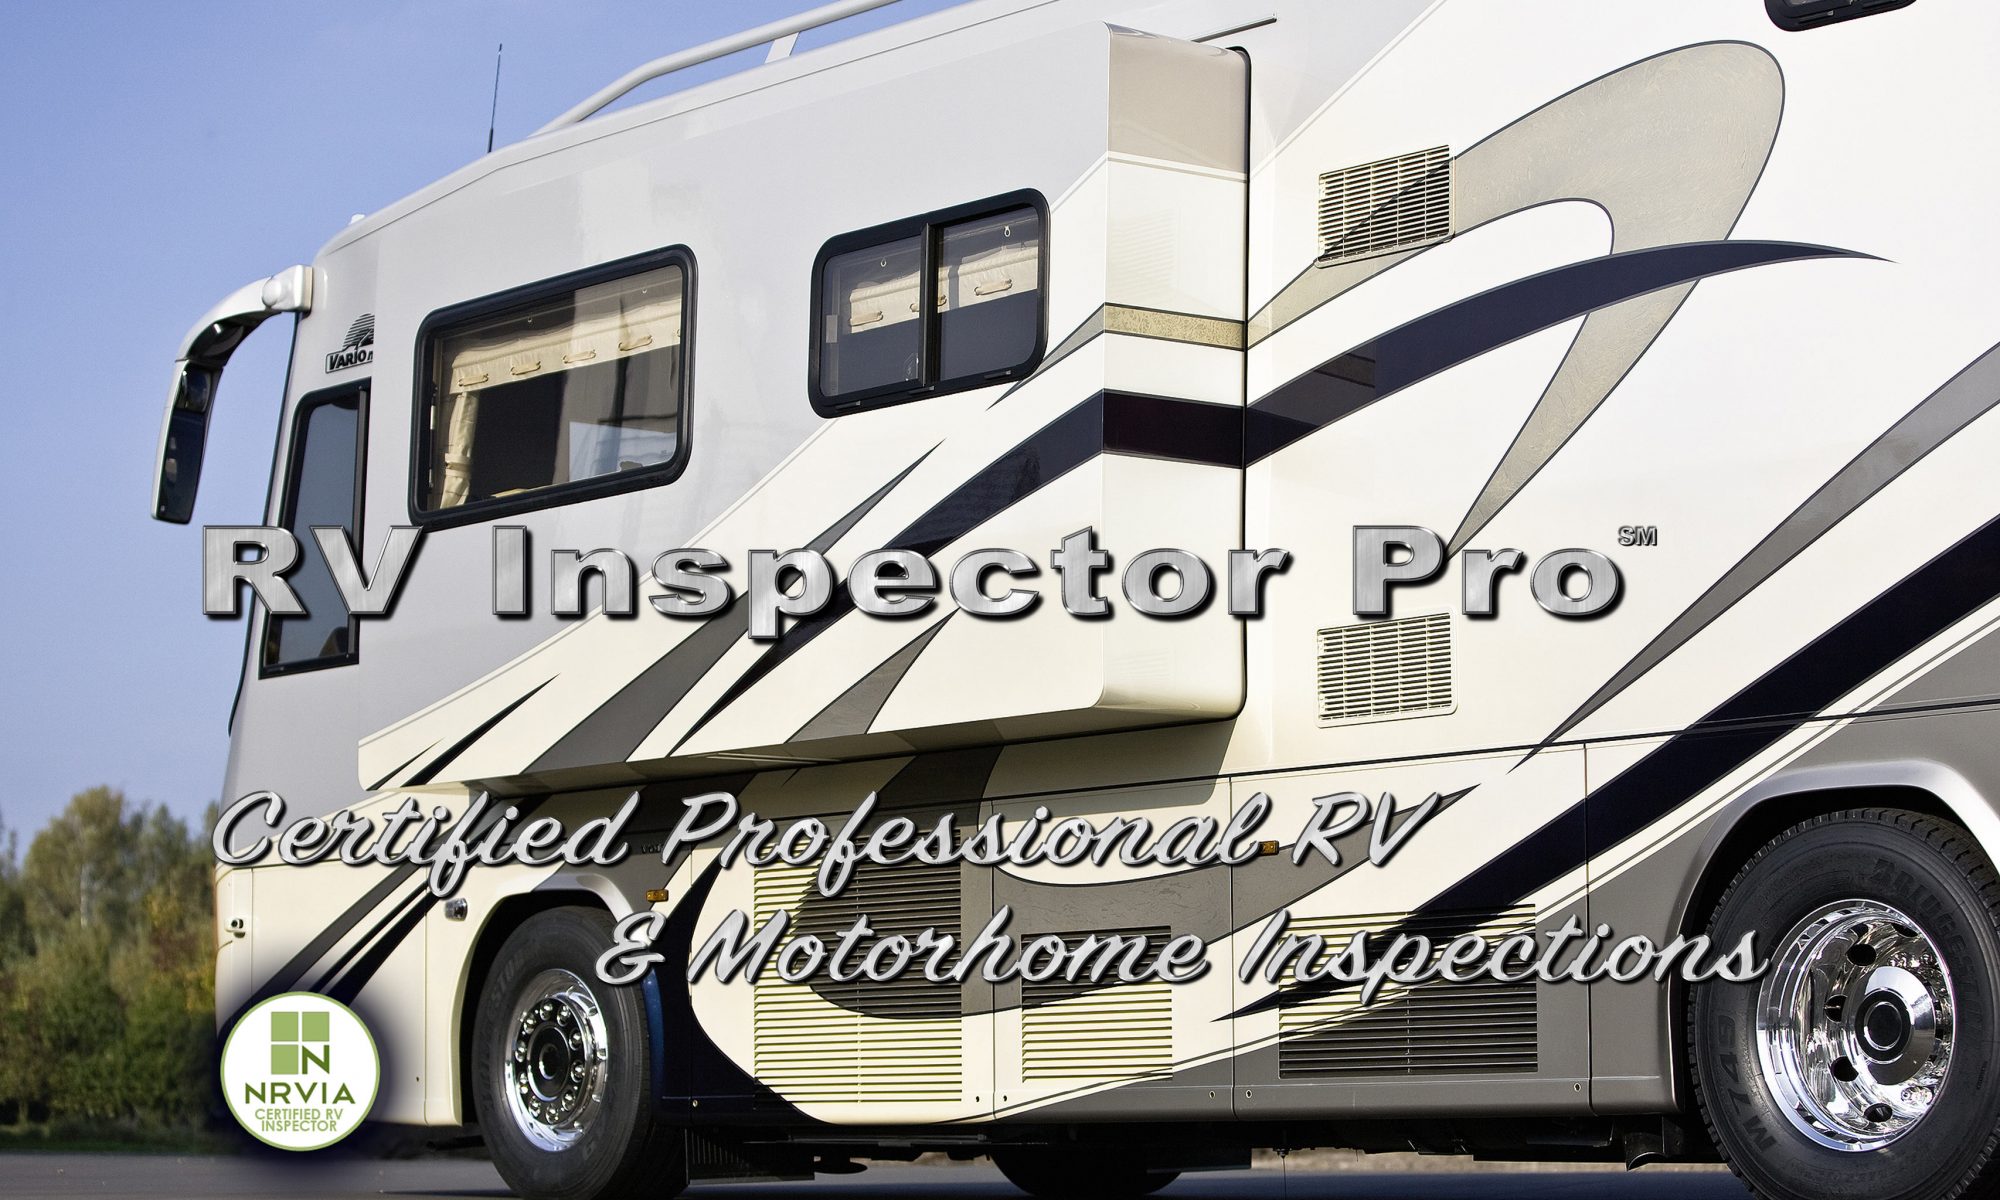 RV Inspector Pro logo over motorhome